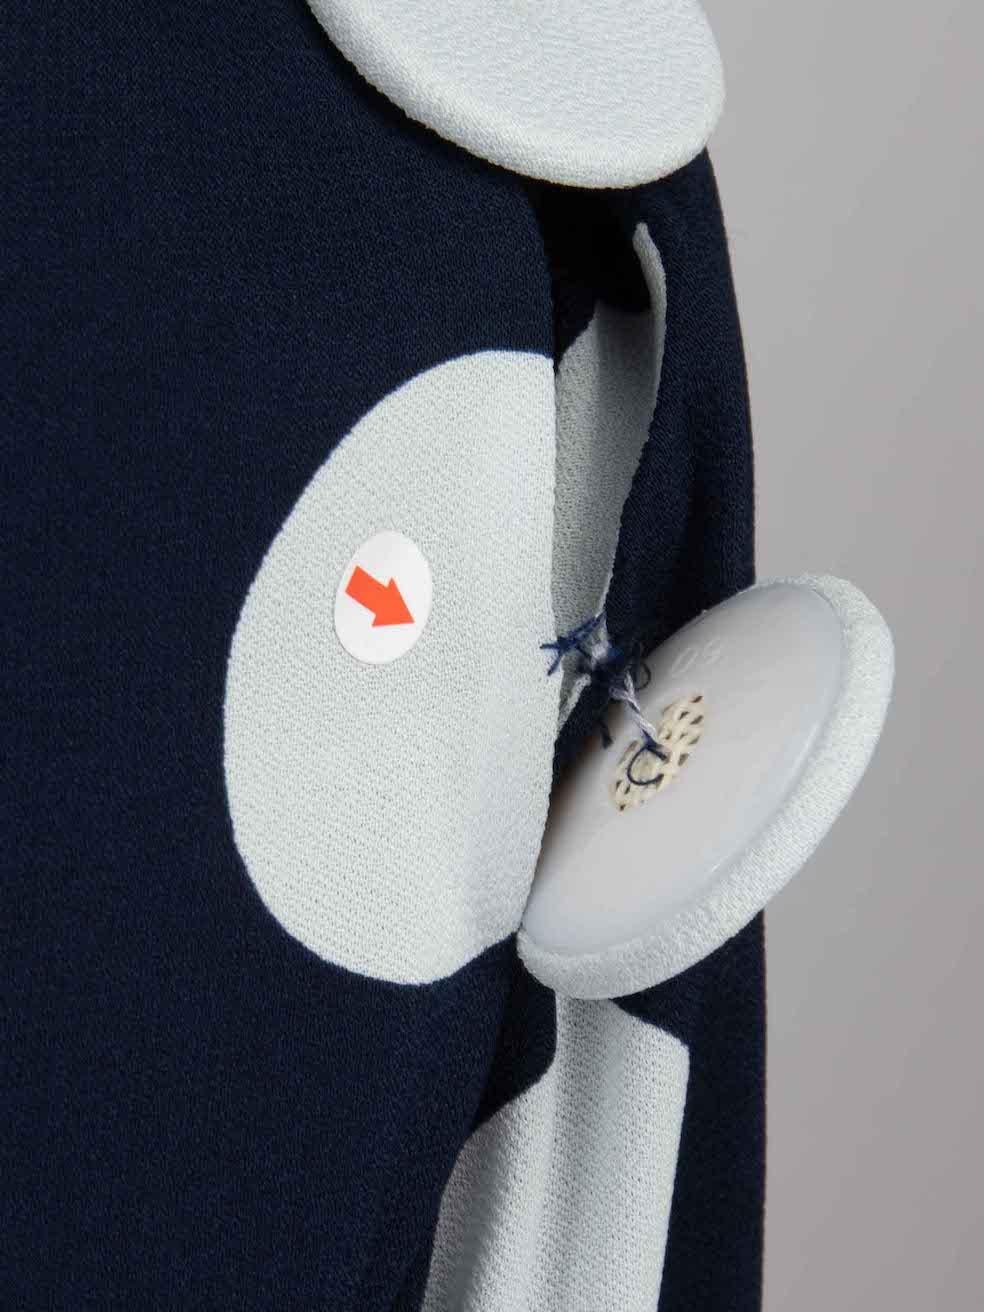 Women's Chloé See by Chloé Navy Polkadot Button Dress Size S For Sale